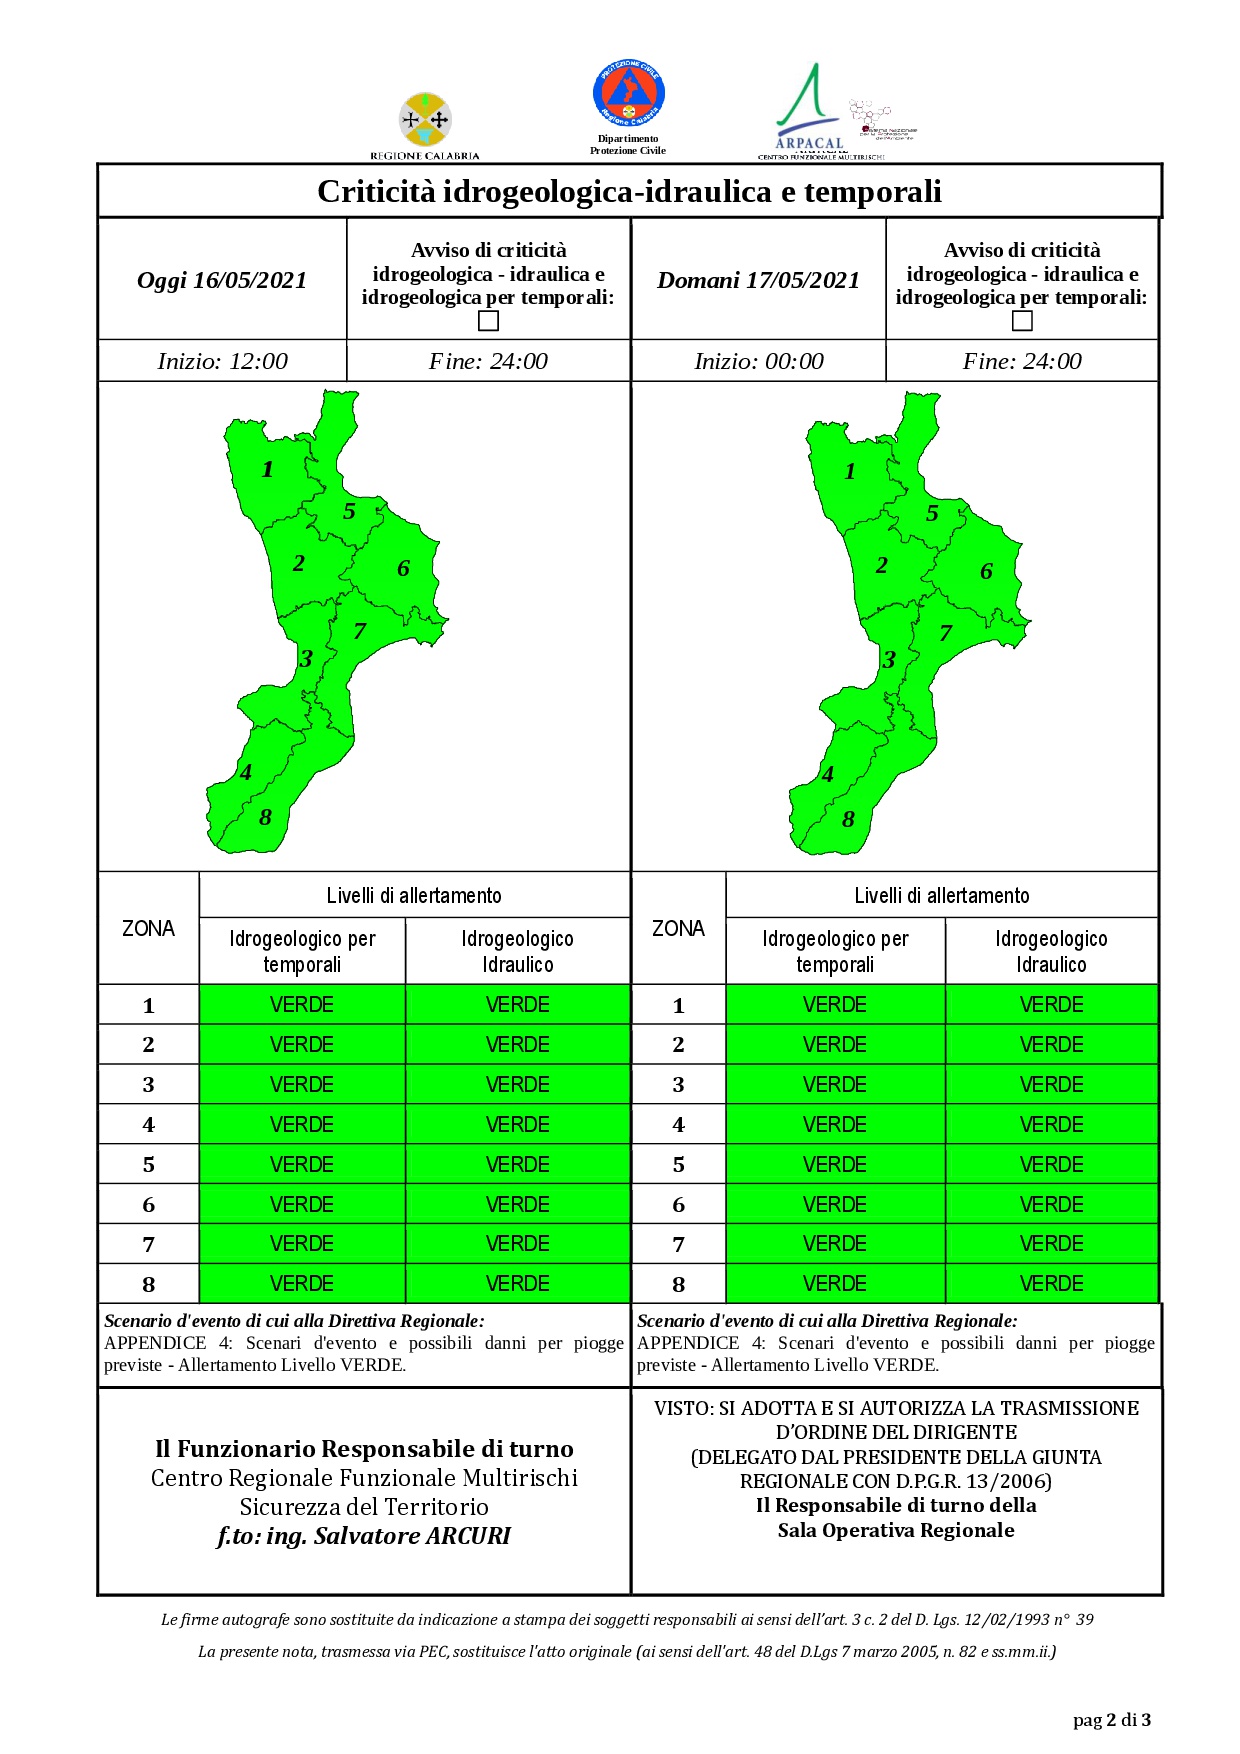 Criticità idrogeologica-idraulica e temporali in Calabria 16-05-2021